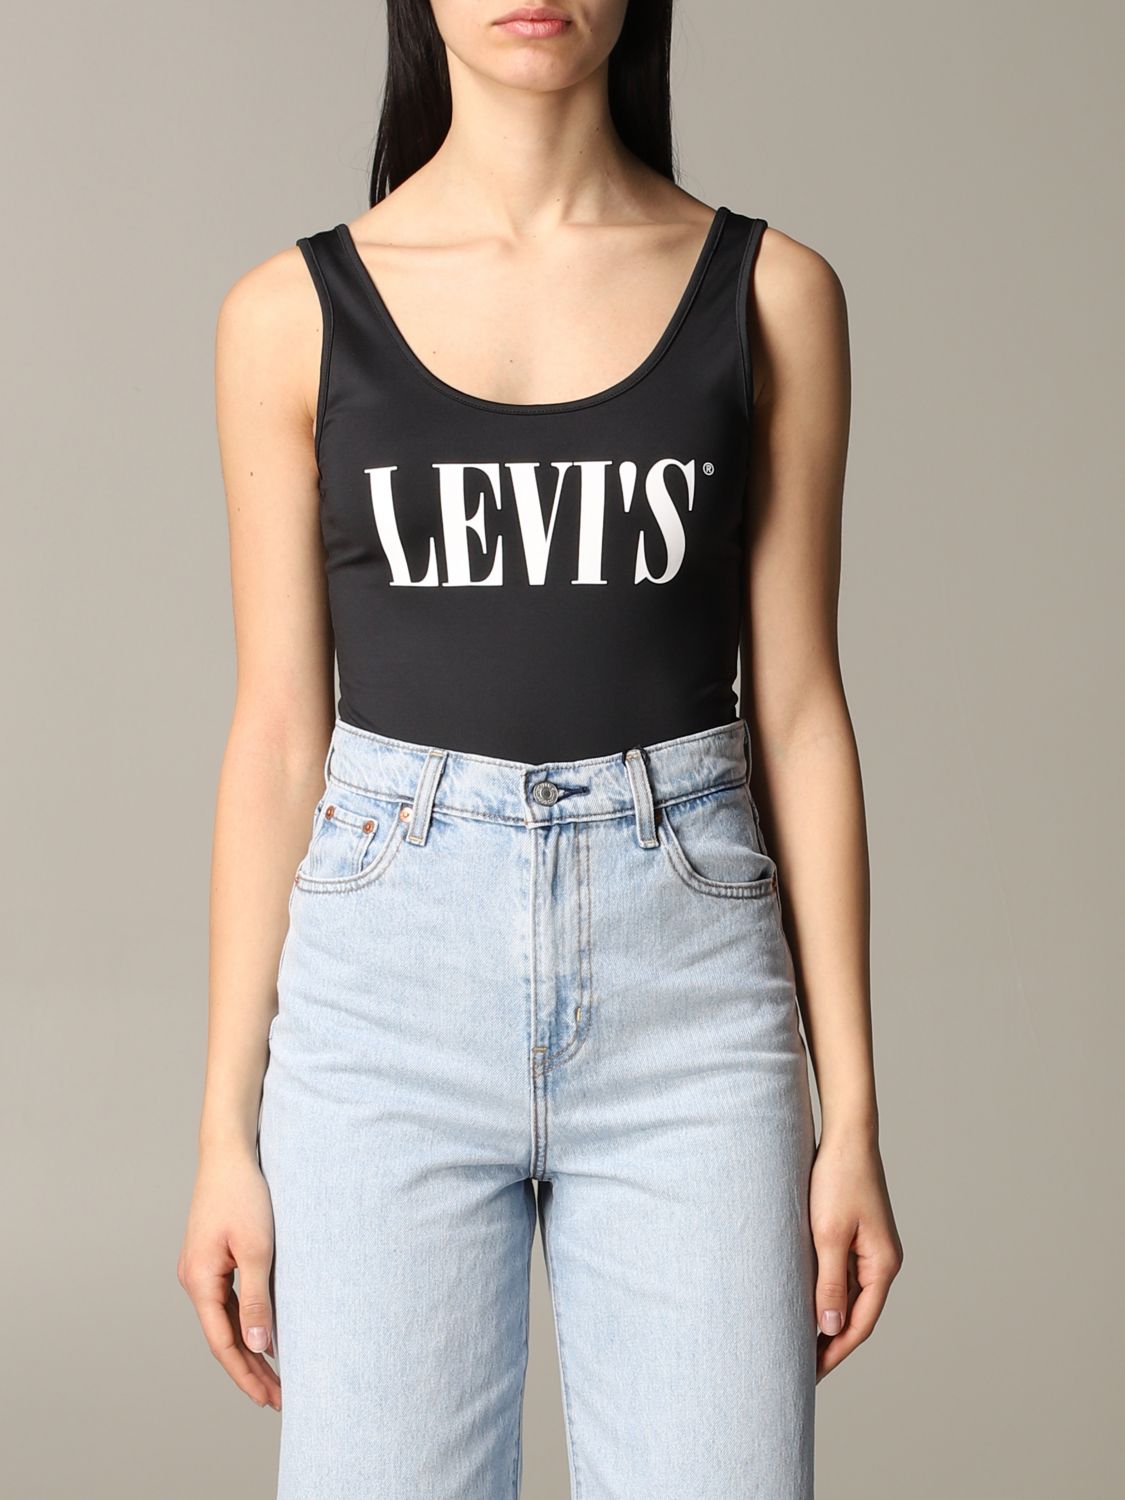 levis black t shirt womens